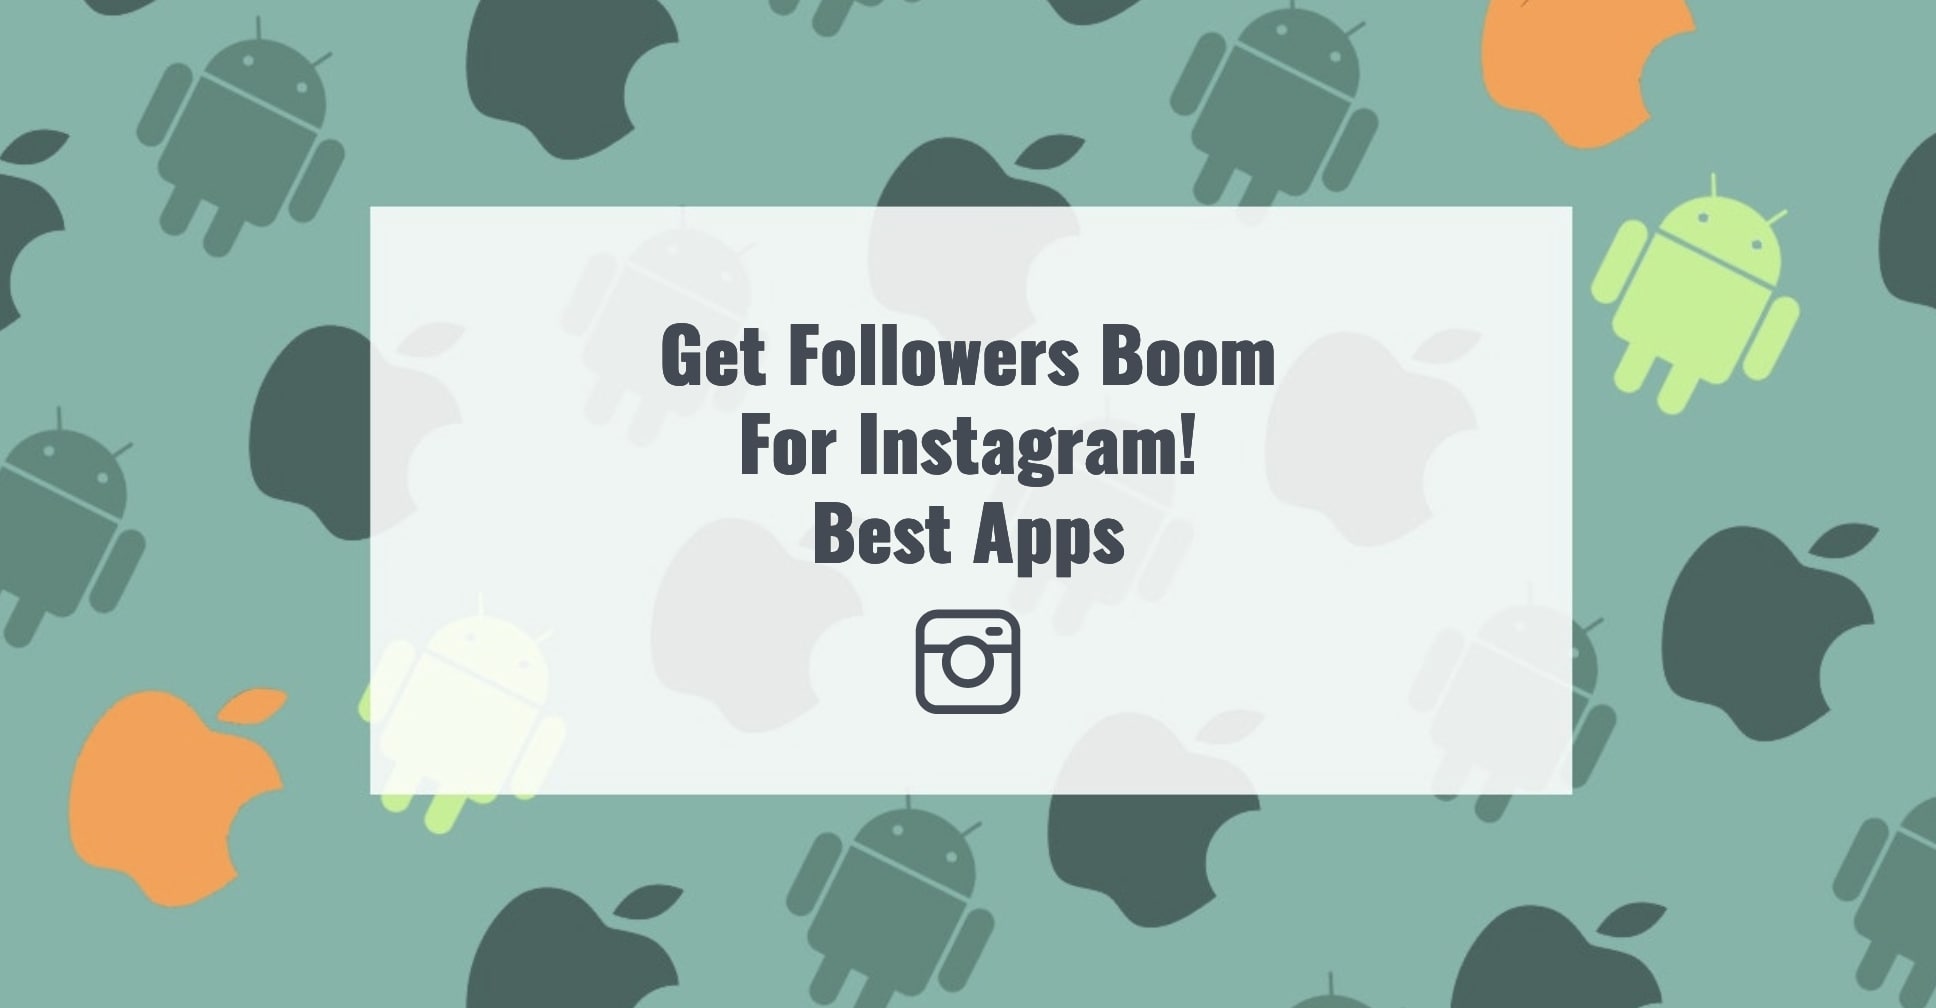 Get Followers Boom For Instagram! 9 Best Apps